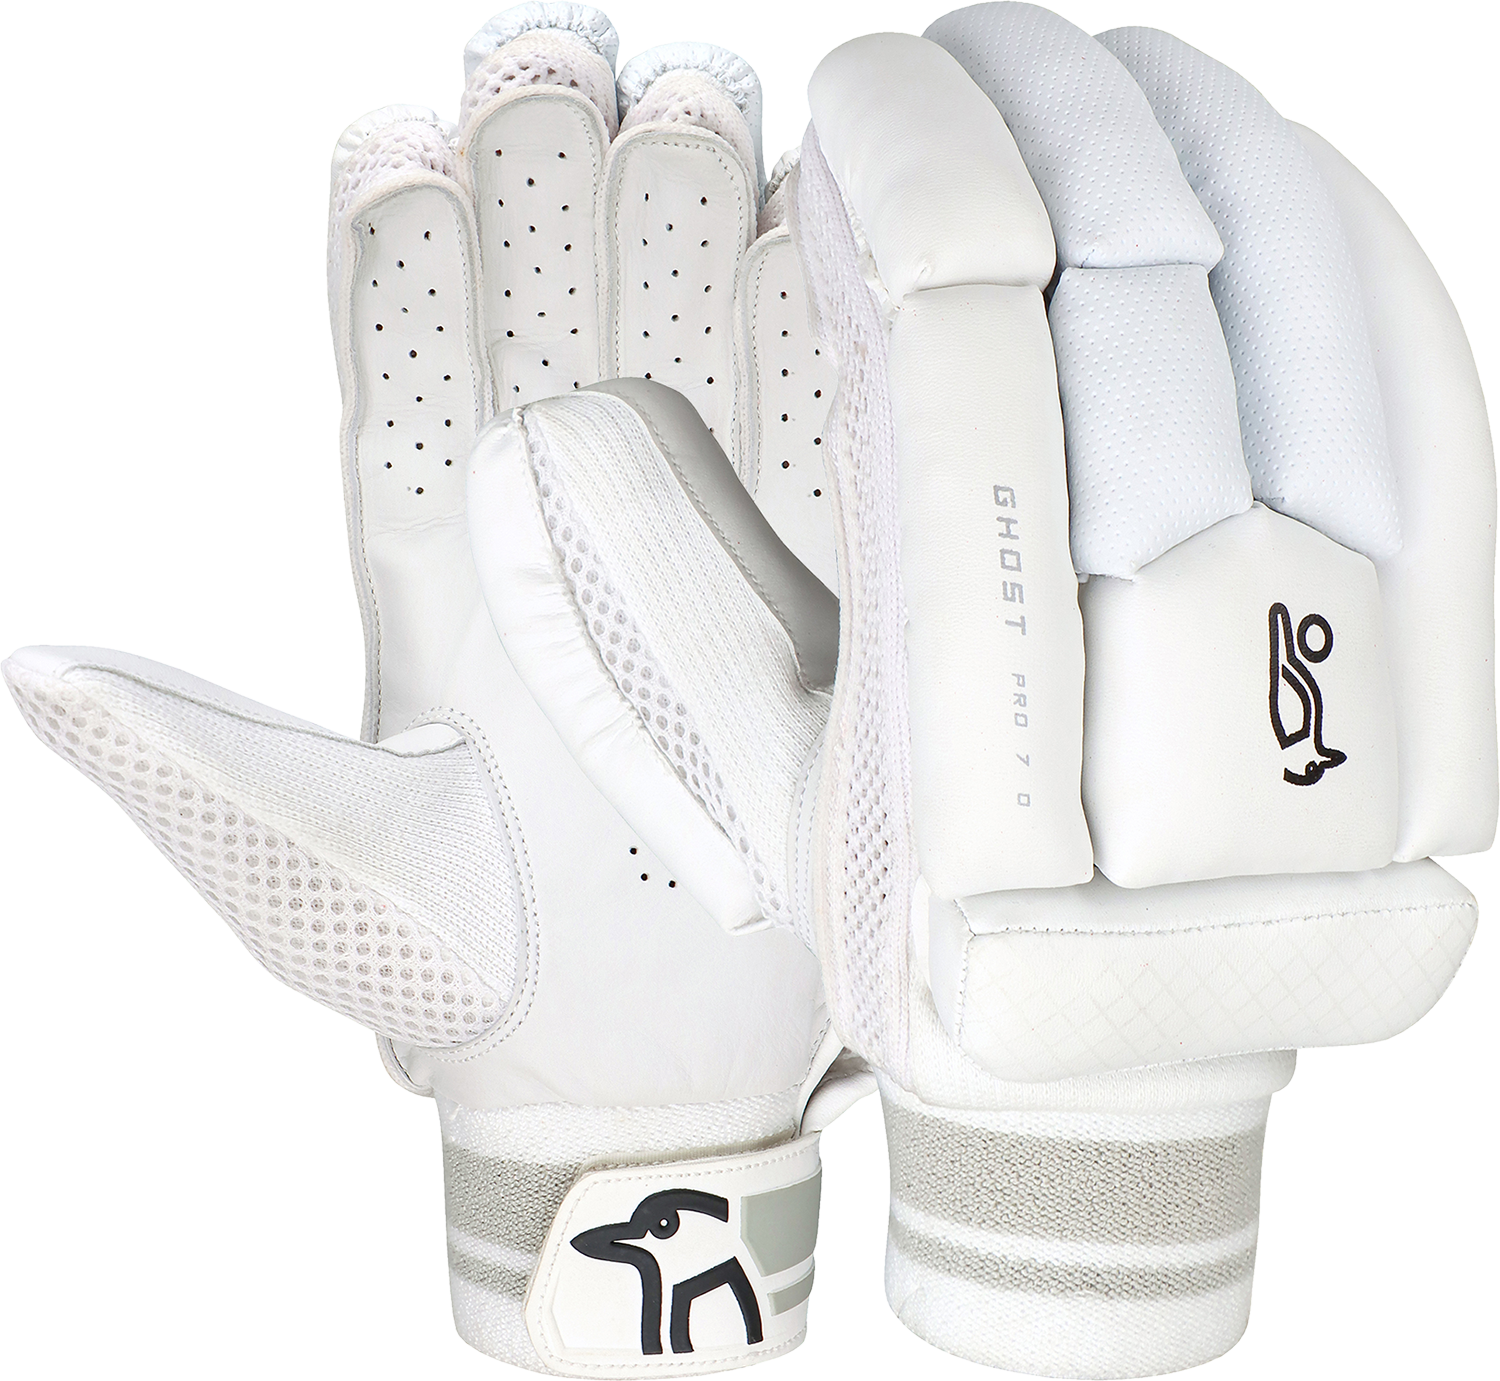 Kookaburra-Ghost-Pro-7.0-Batting-Gloves